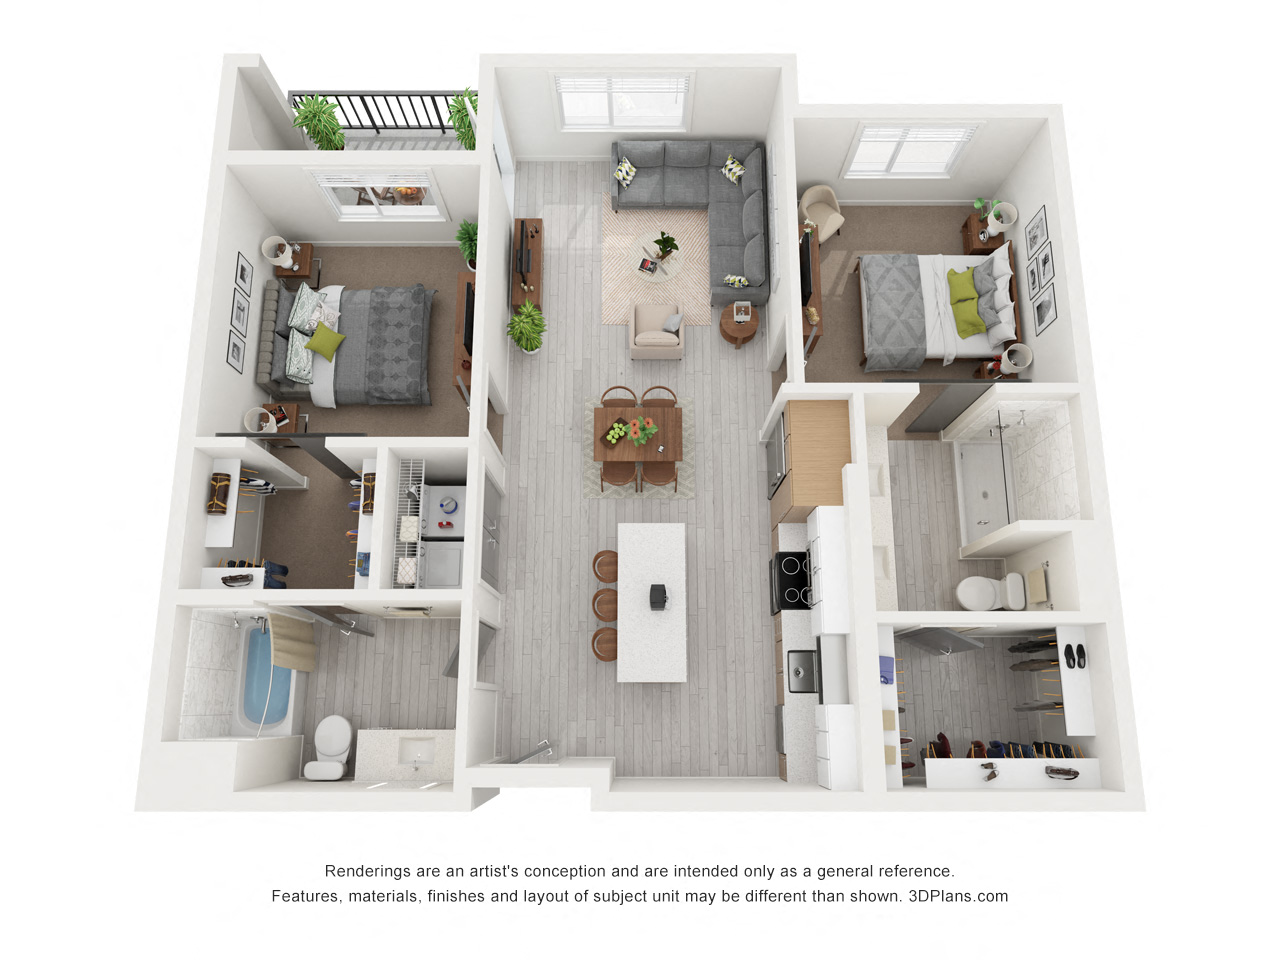 The Eisley_B2 2 bedroom floor plan